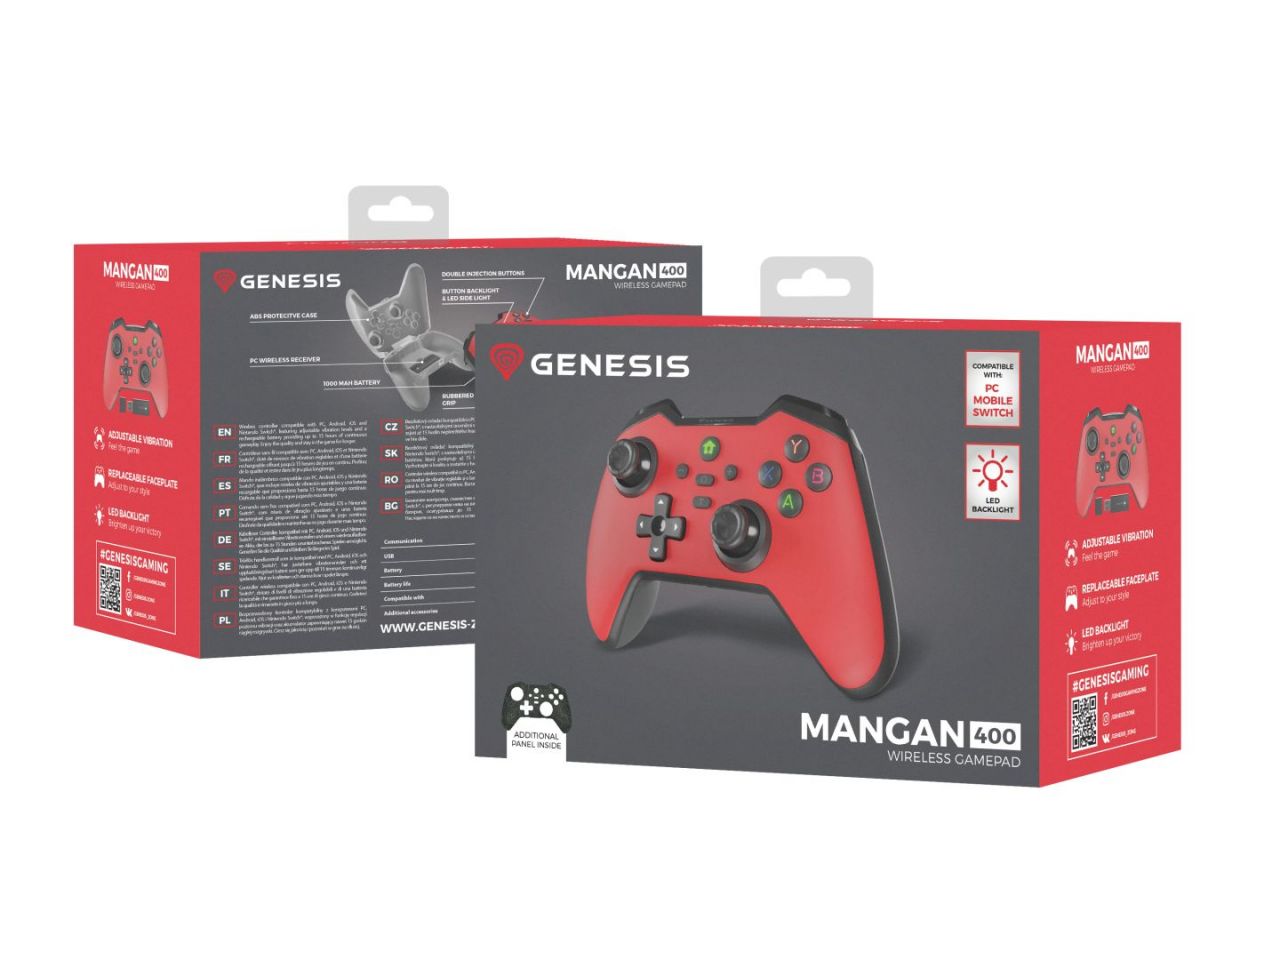 Genesis Mangan 400 Wireless Gamepad Red